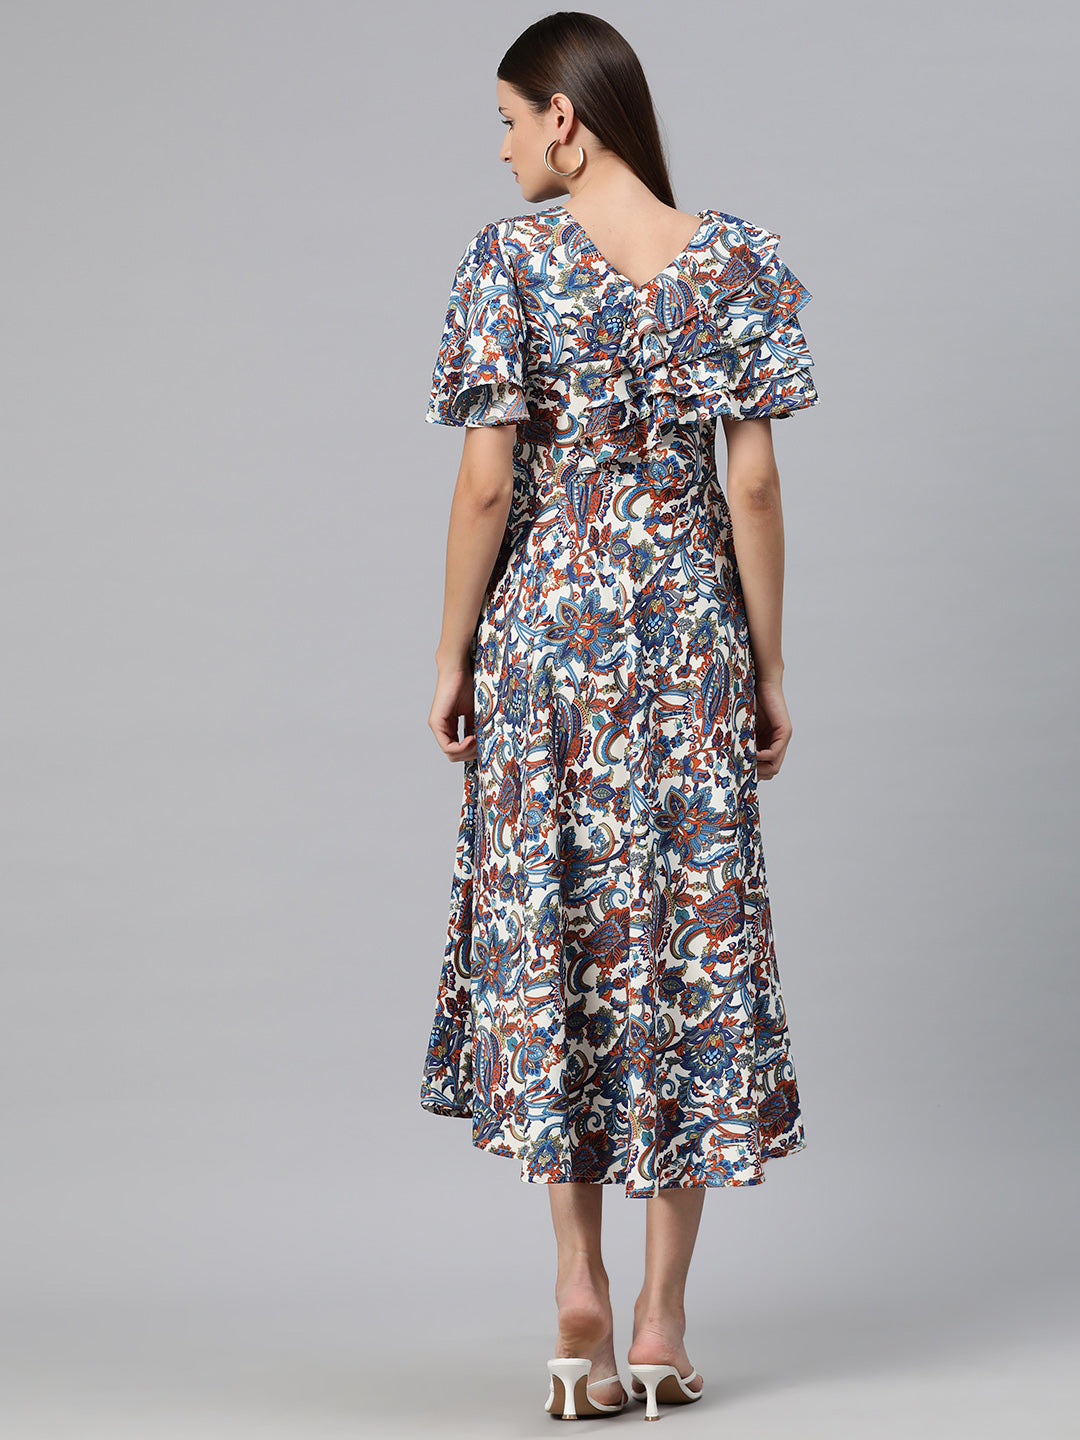 Cottinfab Women Floral Print Flared Sleeve Layered Crepe A-Line Midi Dress